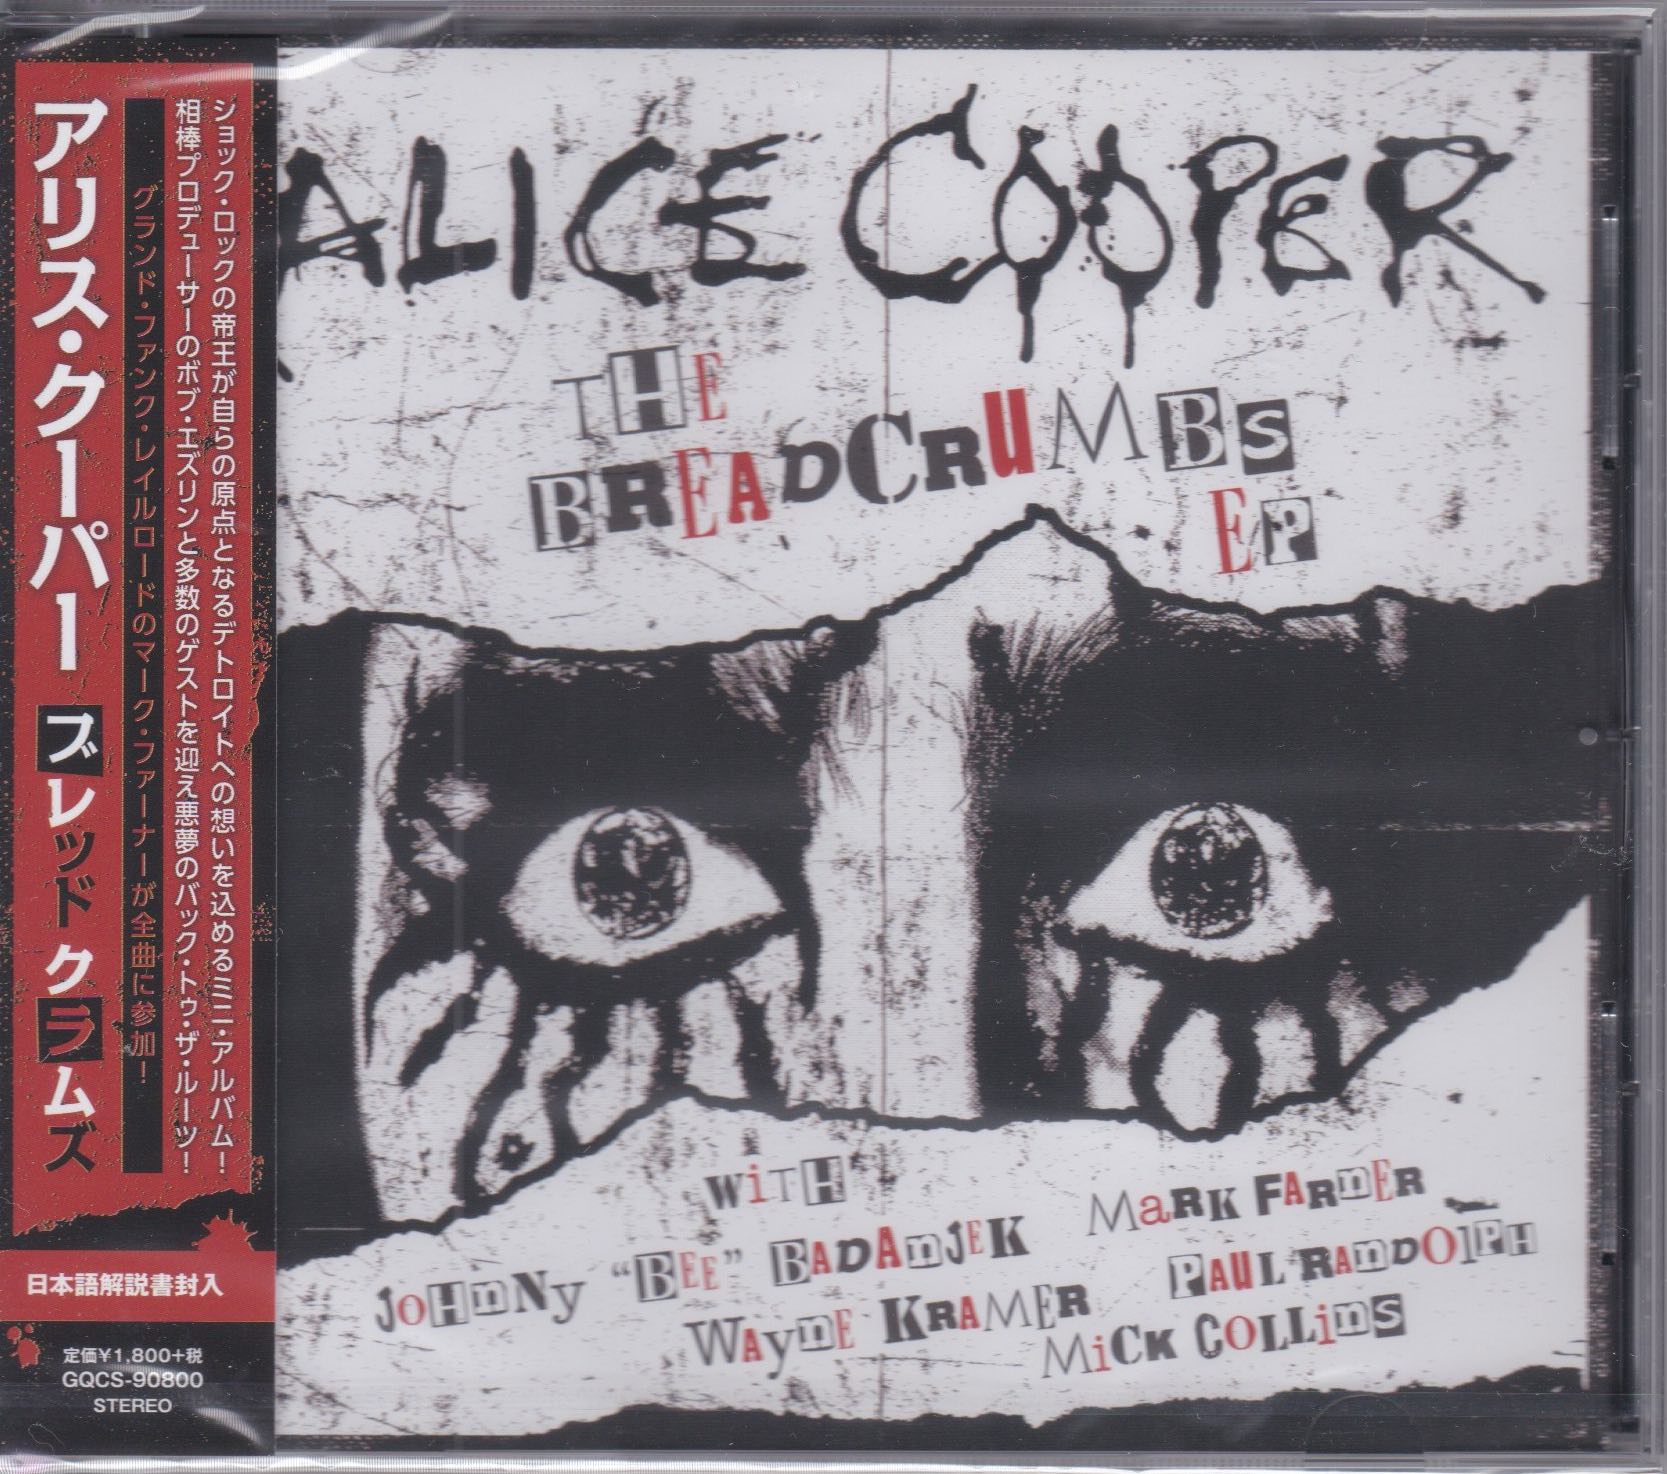 Alice Cooper – The Breadcrumbs EP